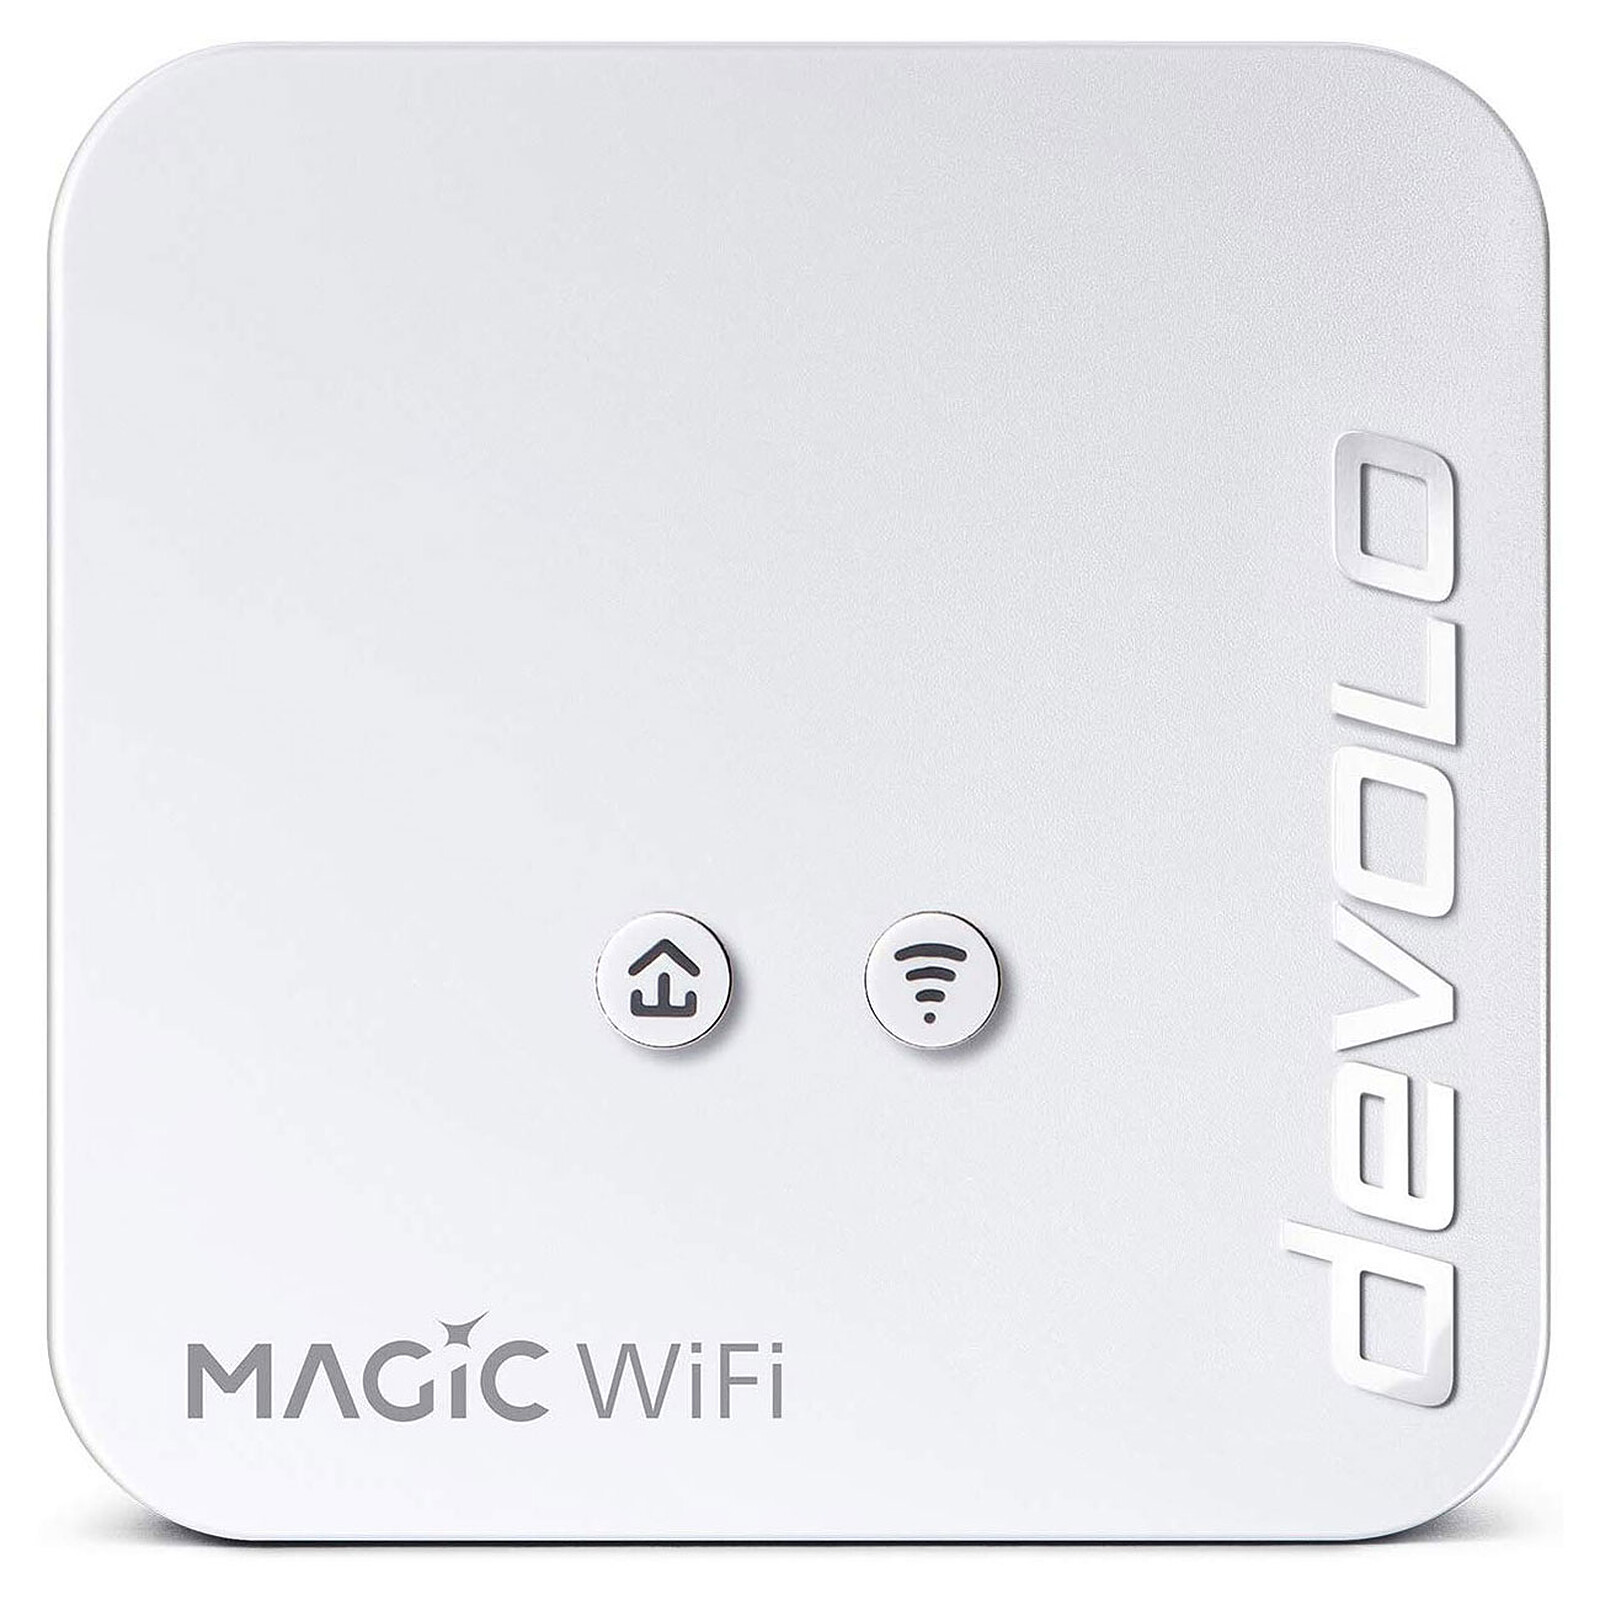 devolo Magic 1 WiFi Wireless Access Point with a QCA9561 Wi-Fi SoC